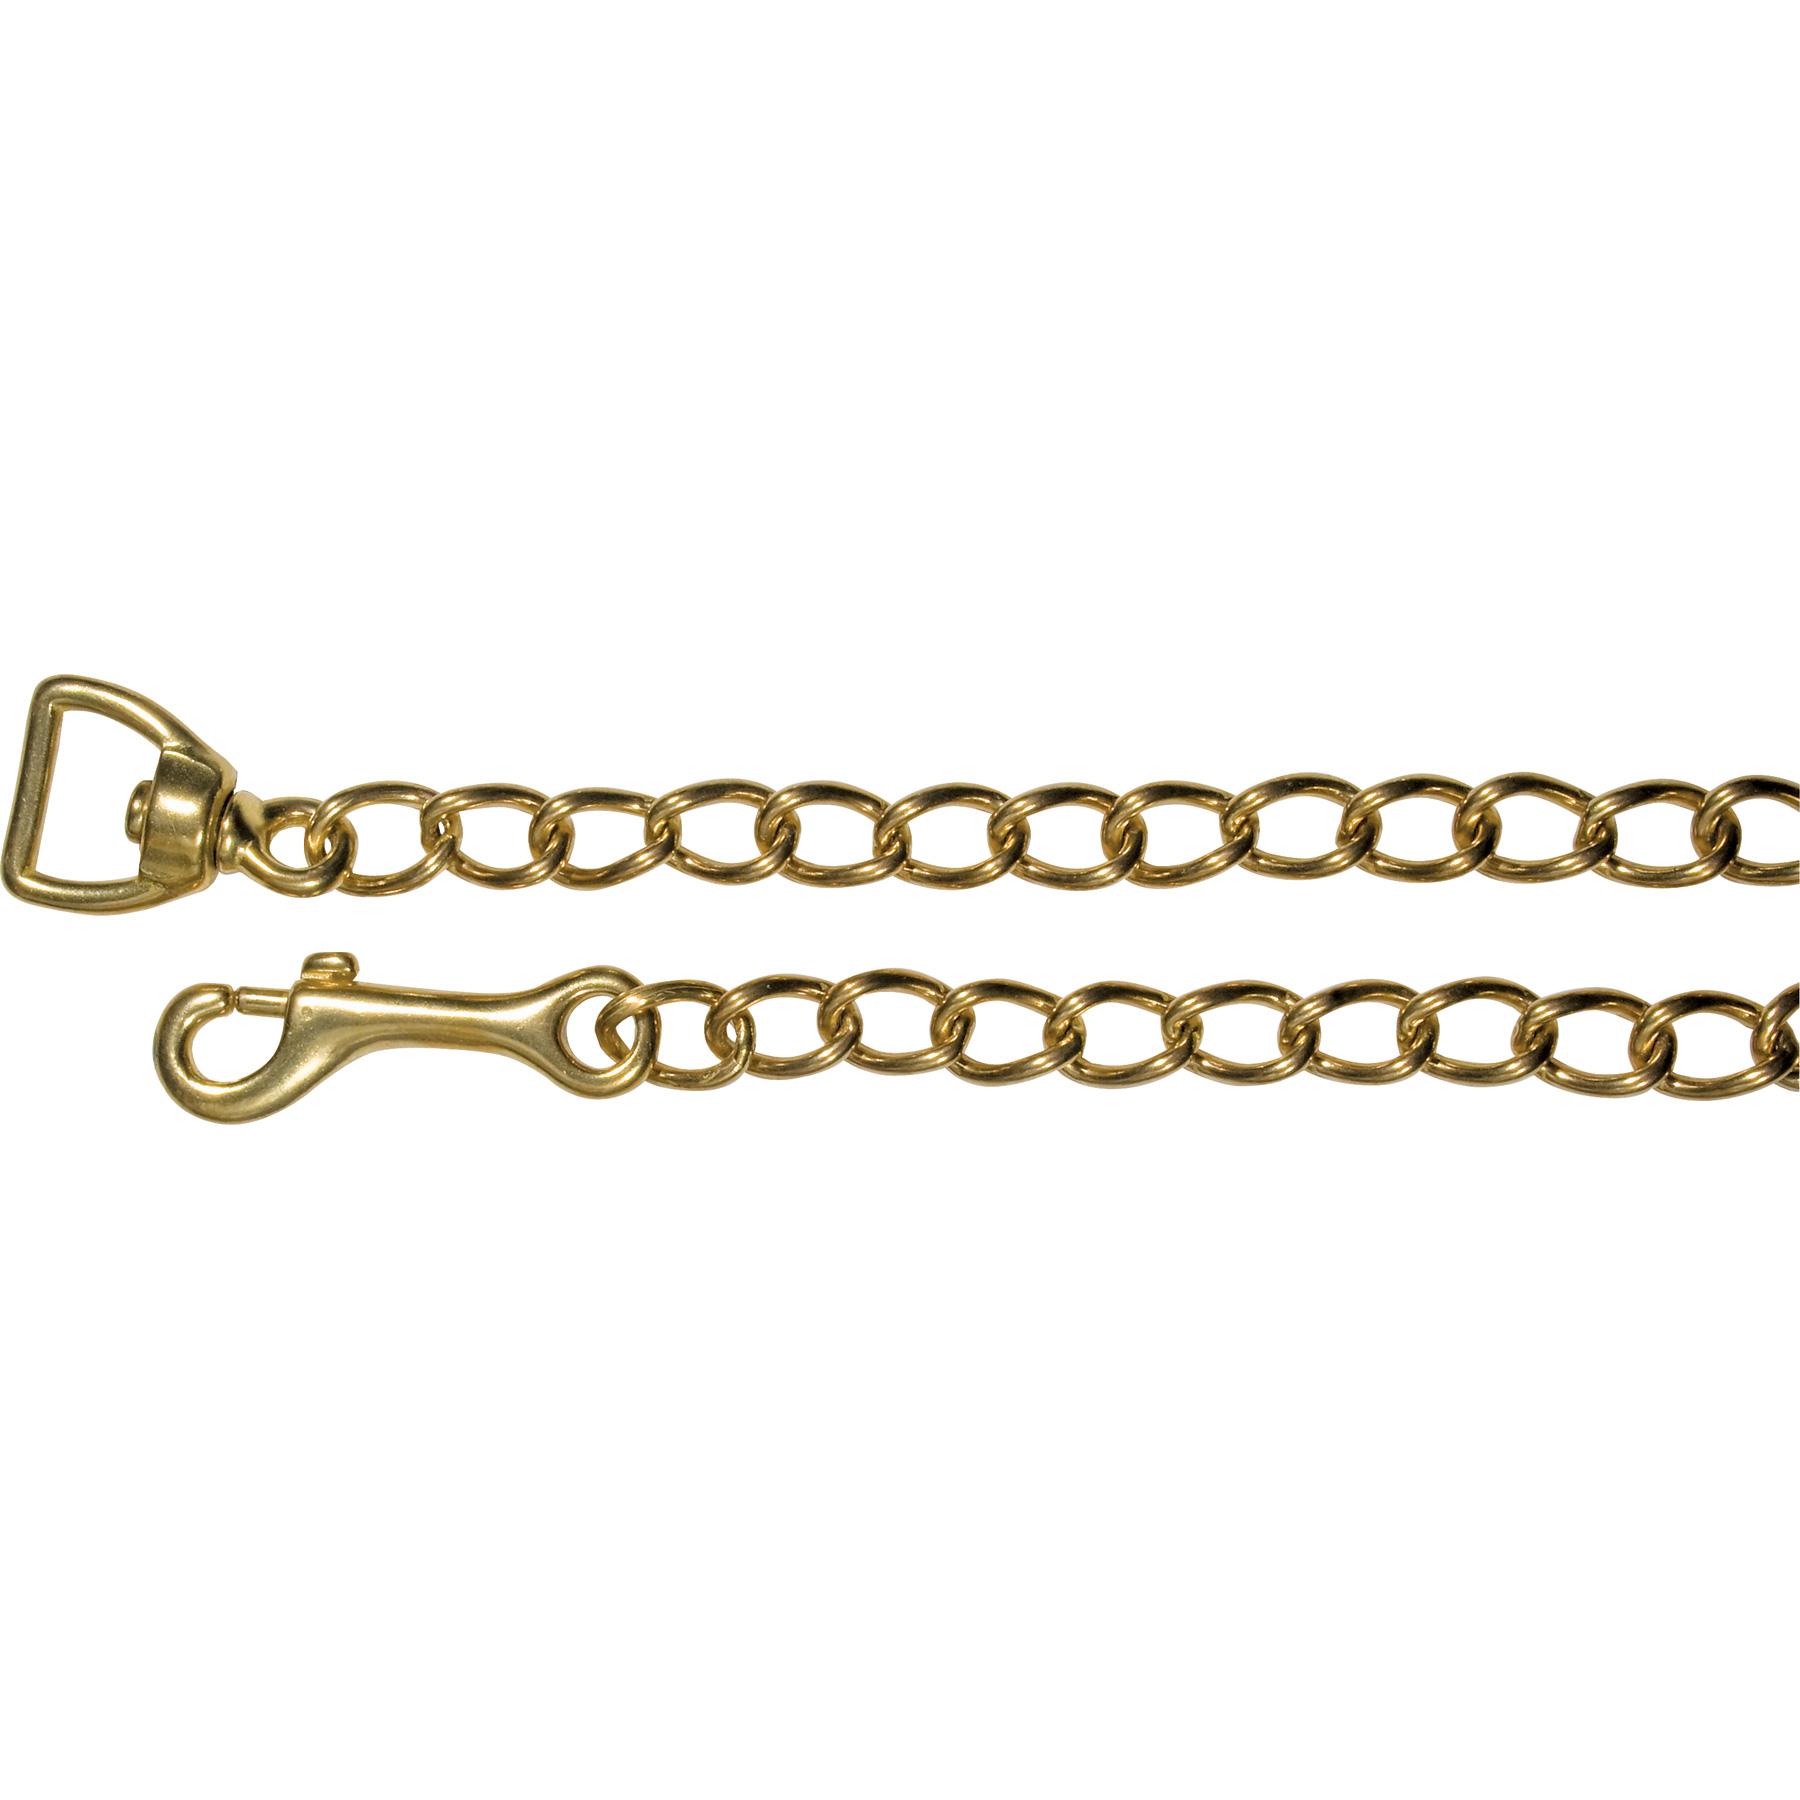 ai02460 Heavy Duty Solid Brass Chain - 30